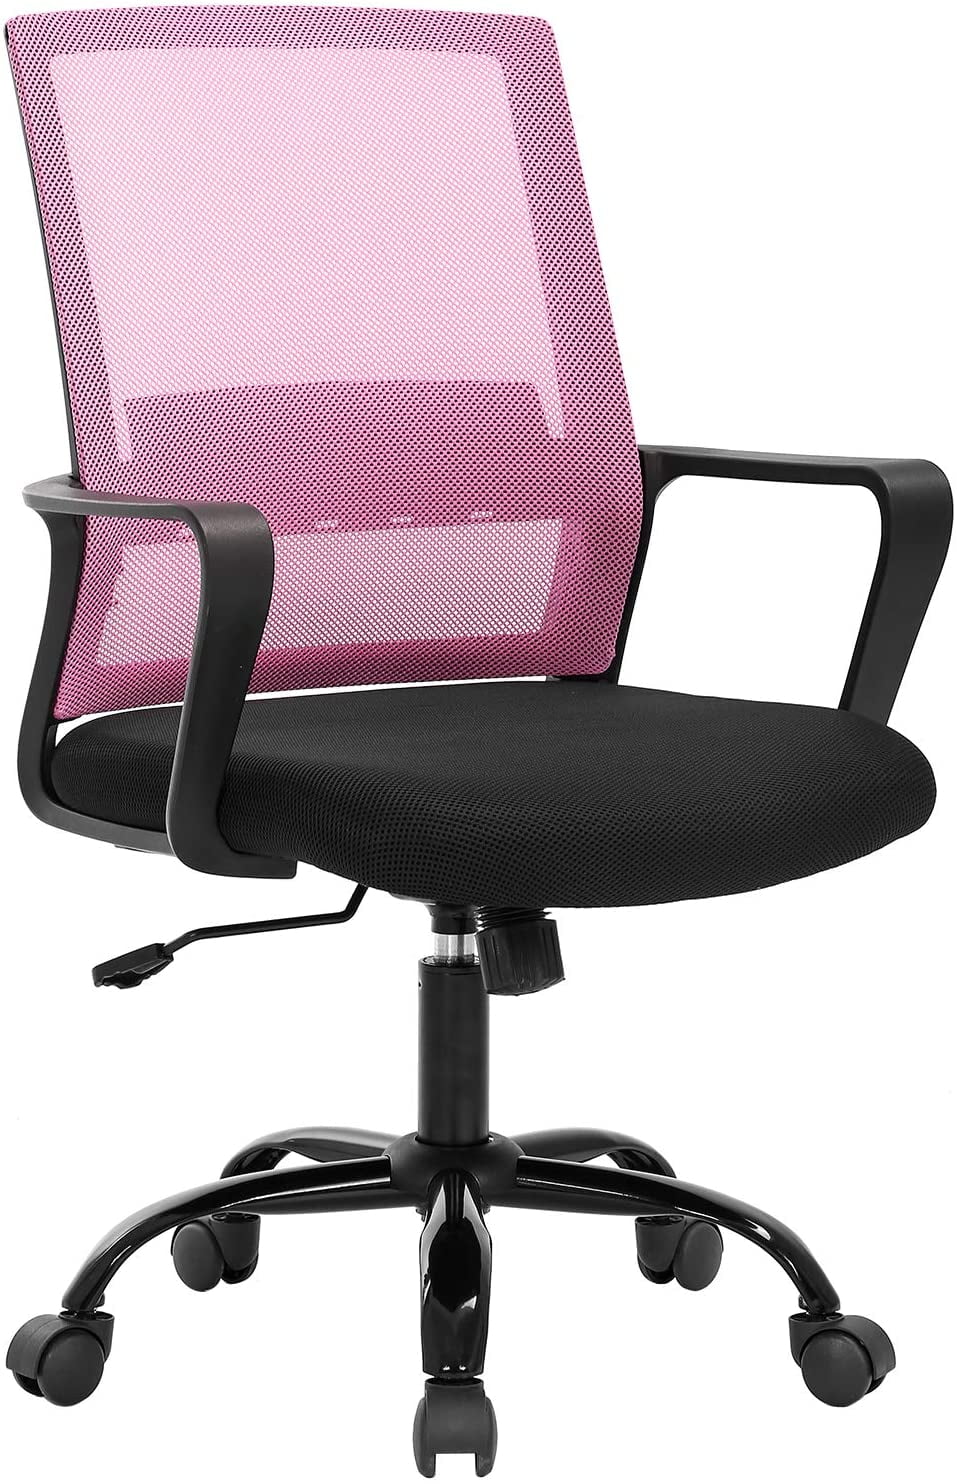 BestOffice Home Office Chair Ergonomic Desk Chair Swivel Rolling